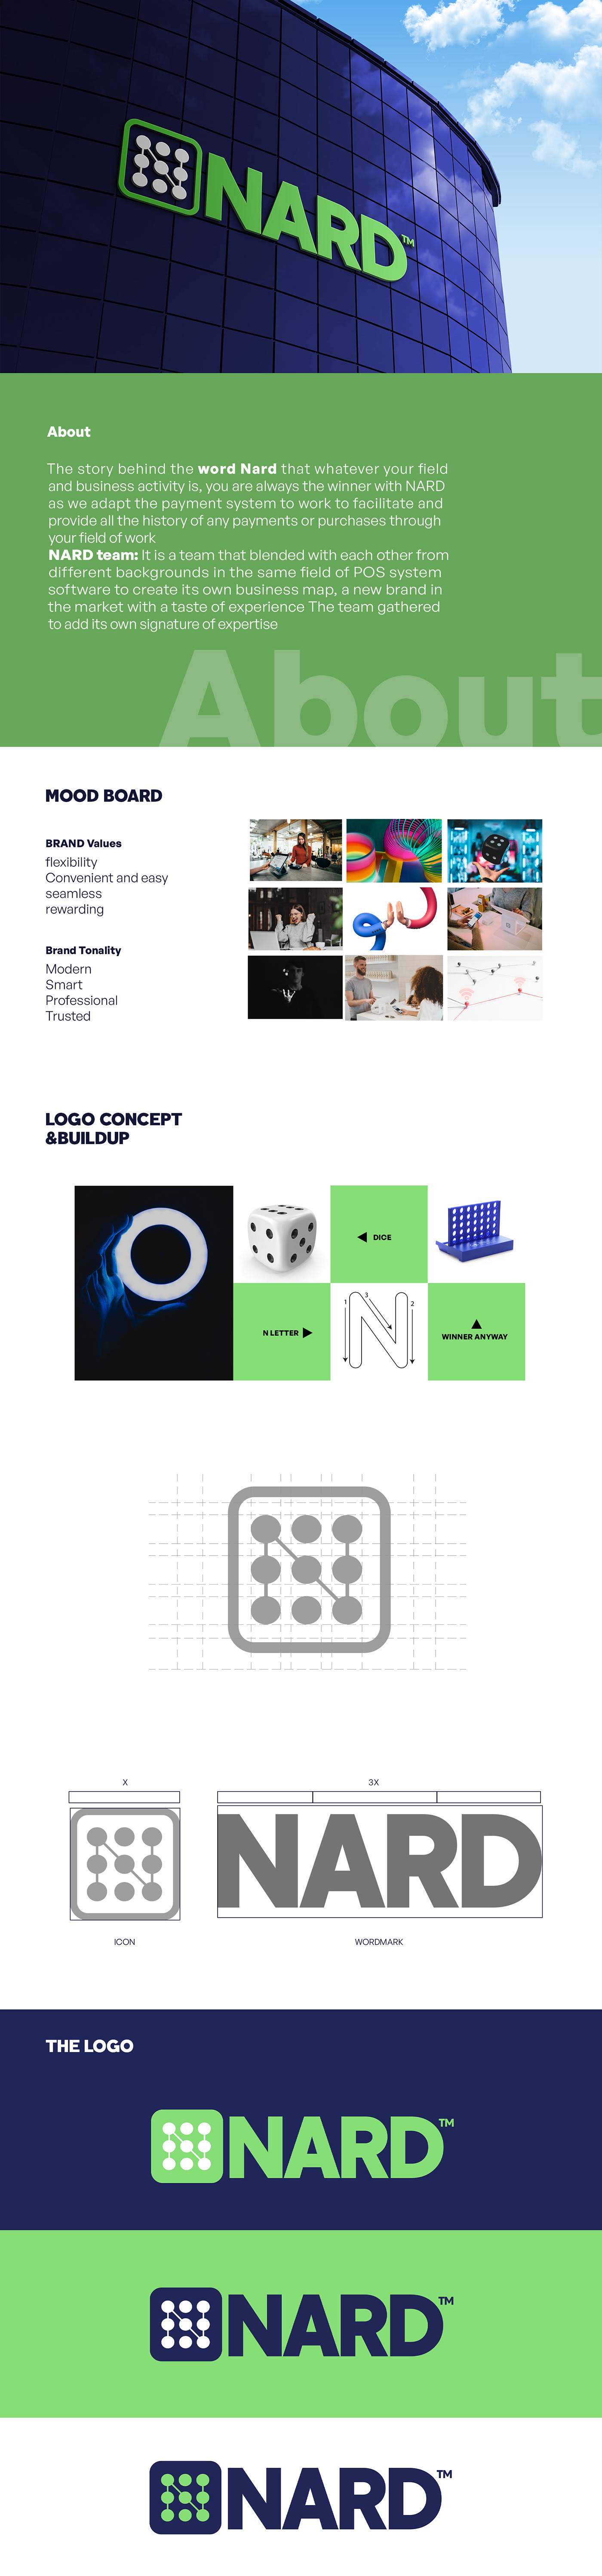 Logo Design Corporate Identity Brand Design Nard branding  visual identity Advertising  NARD LOGO nard pos pos